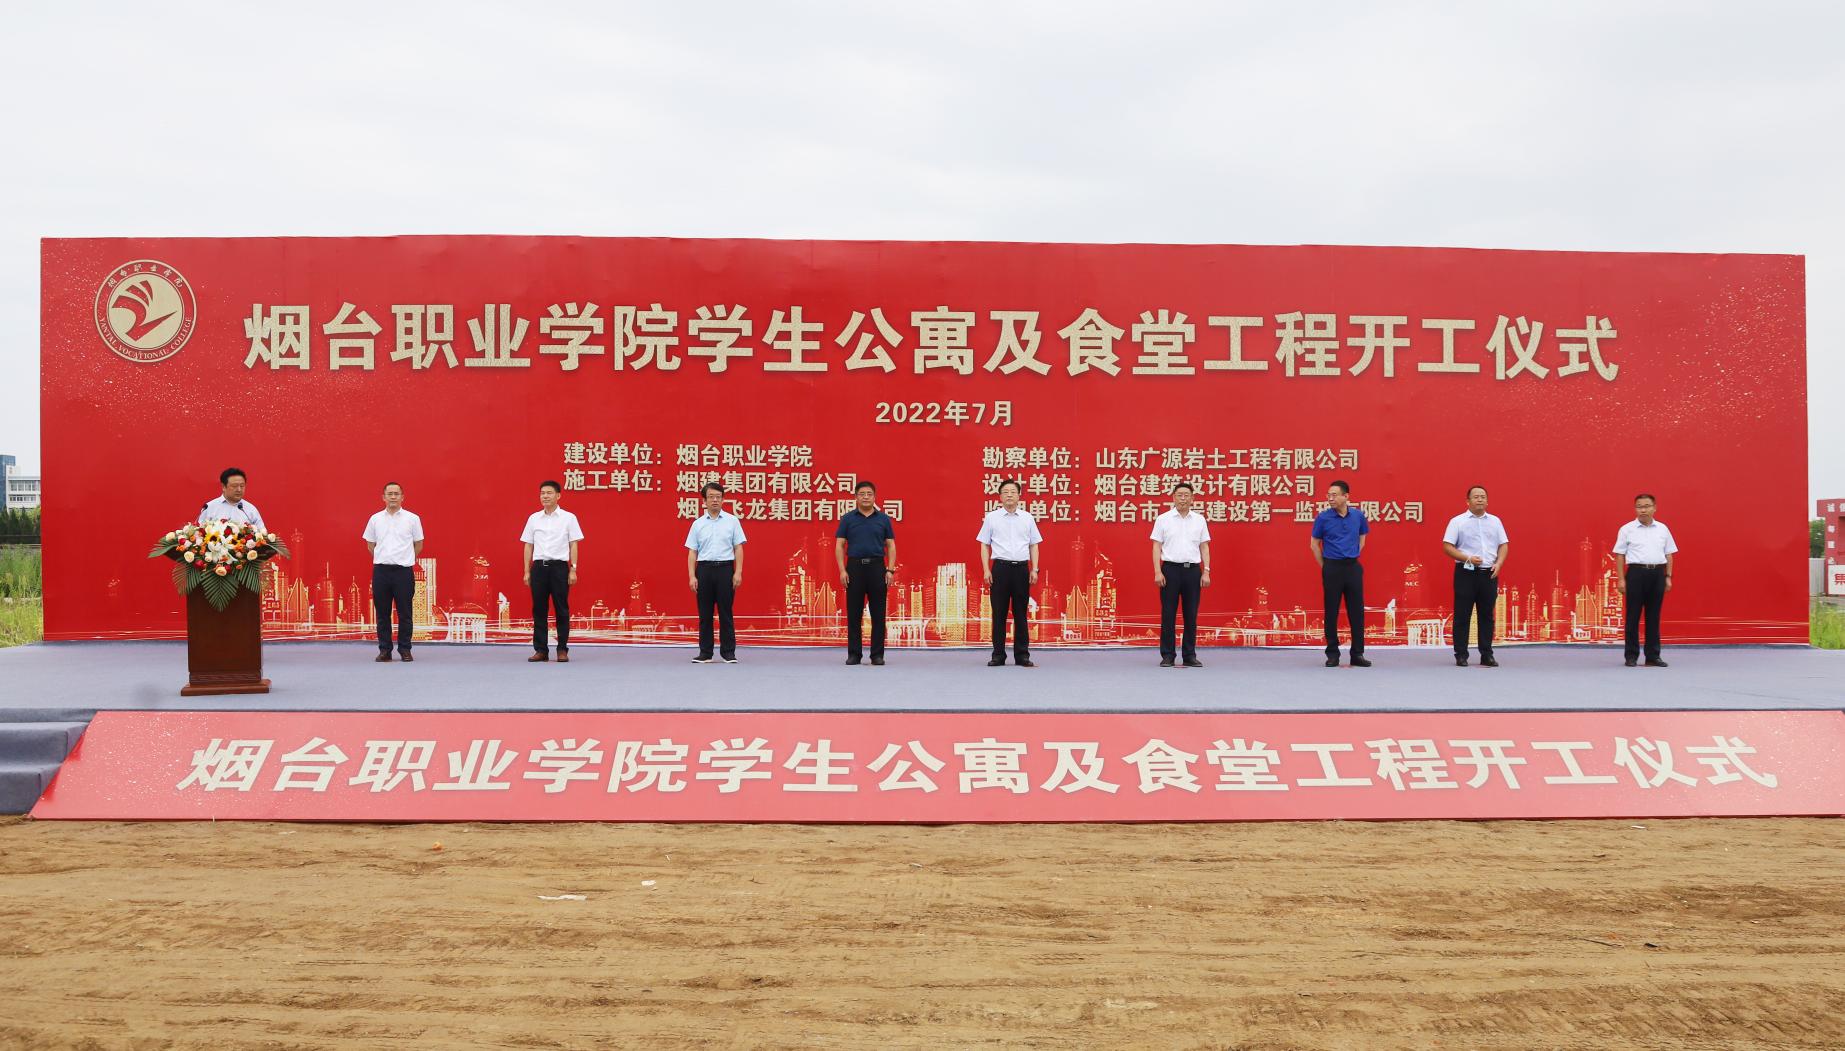 PP电子【中国】有限责任公司承建的烟台职业学院学生公寓及食堂工程正式开工